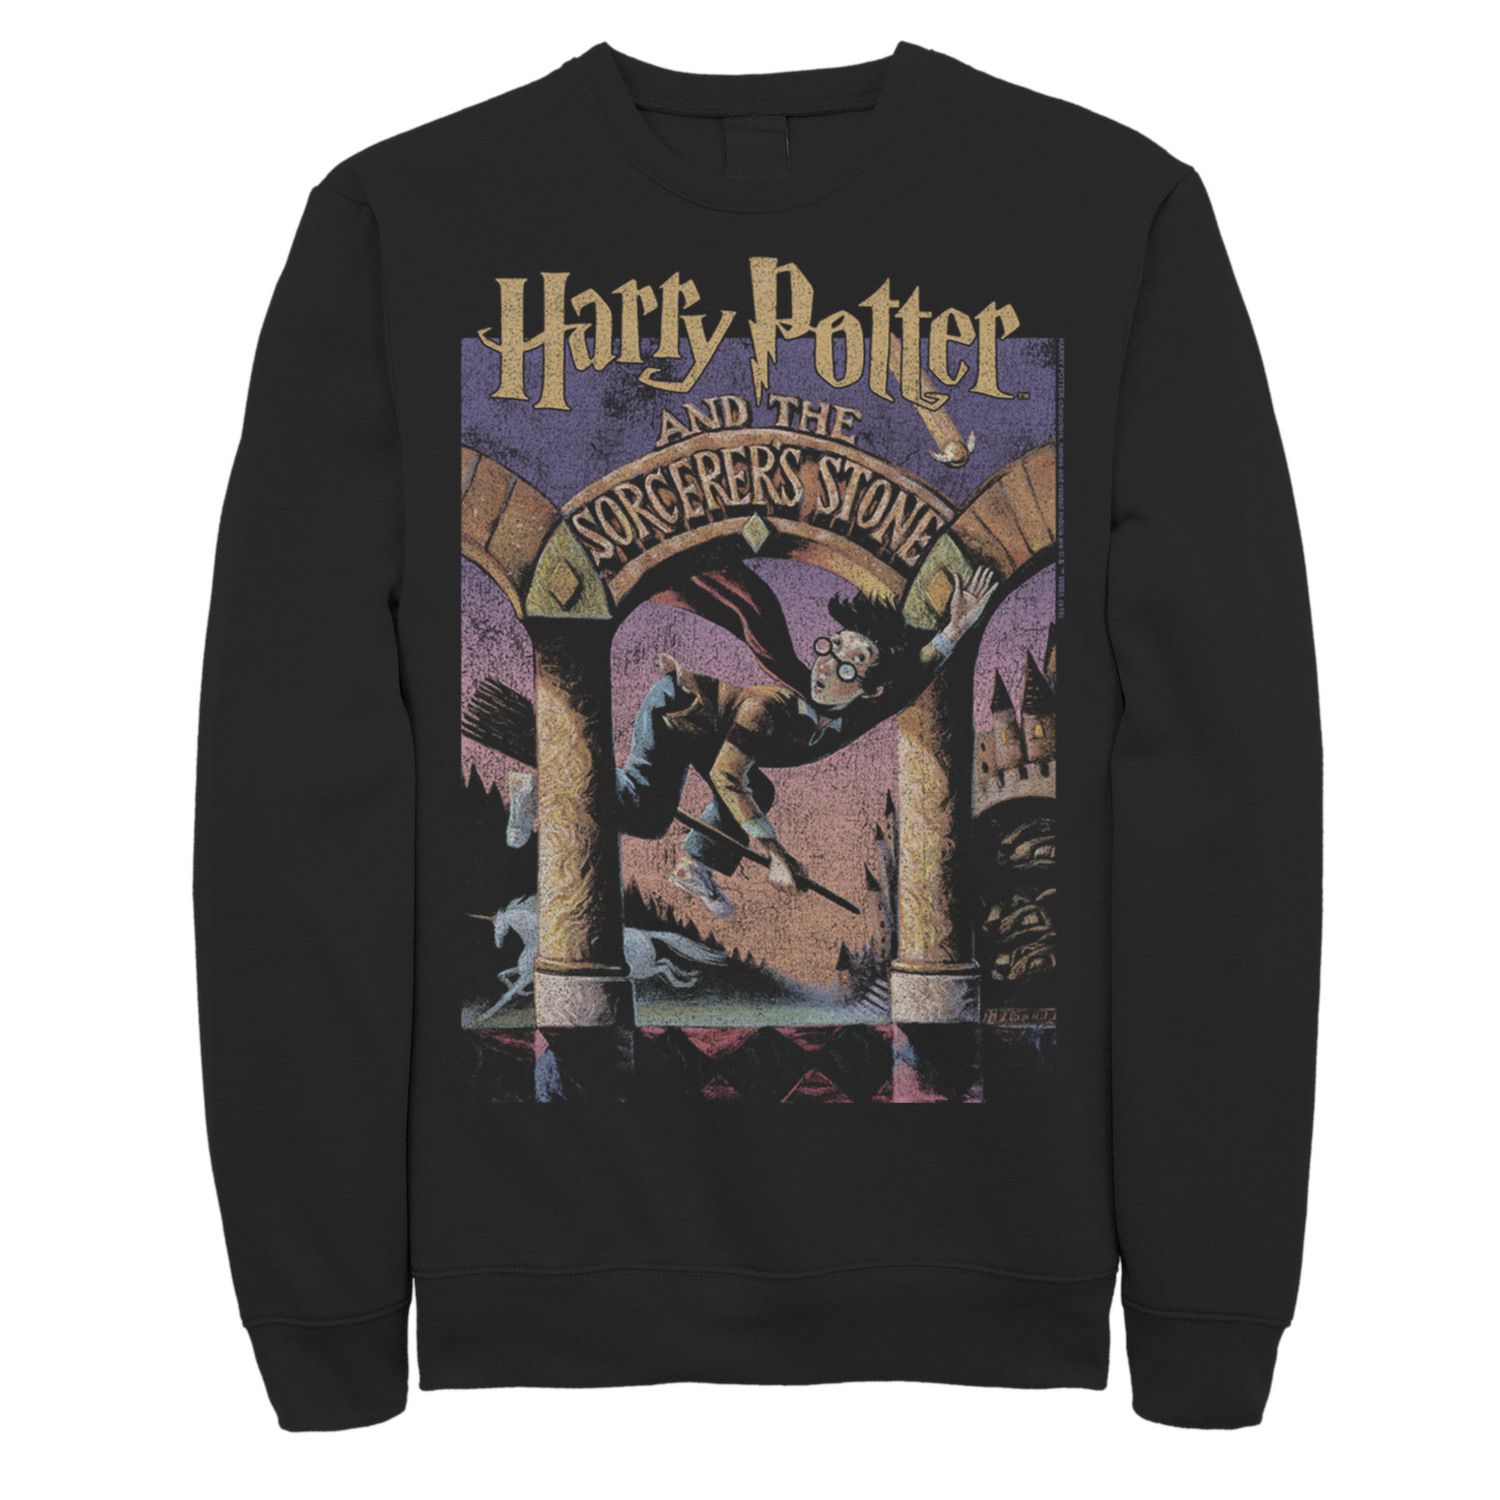 Image for Harry Potter Men's Sorcerers Stone Poster Sweatshirt at Kohl's.